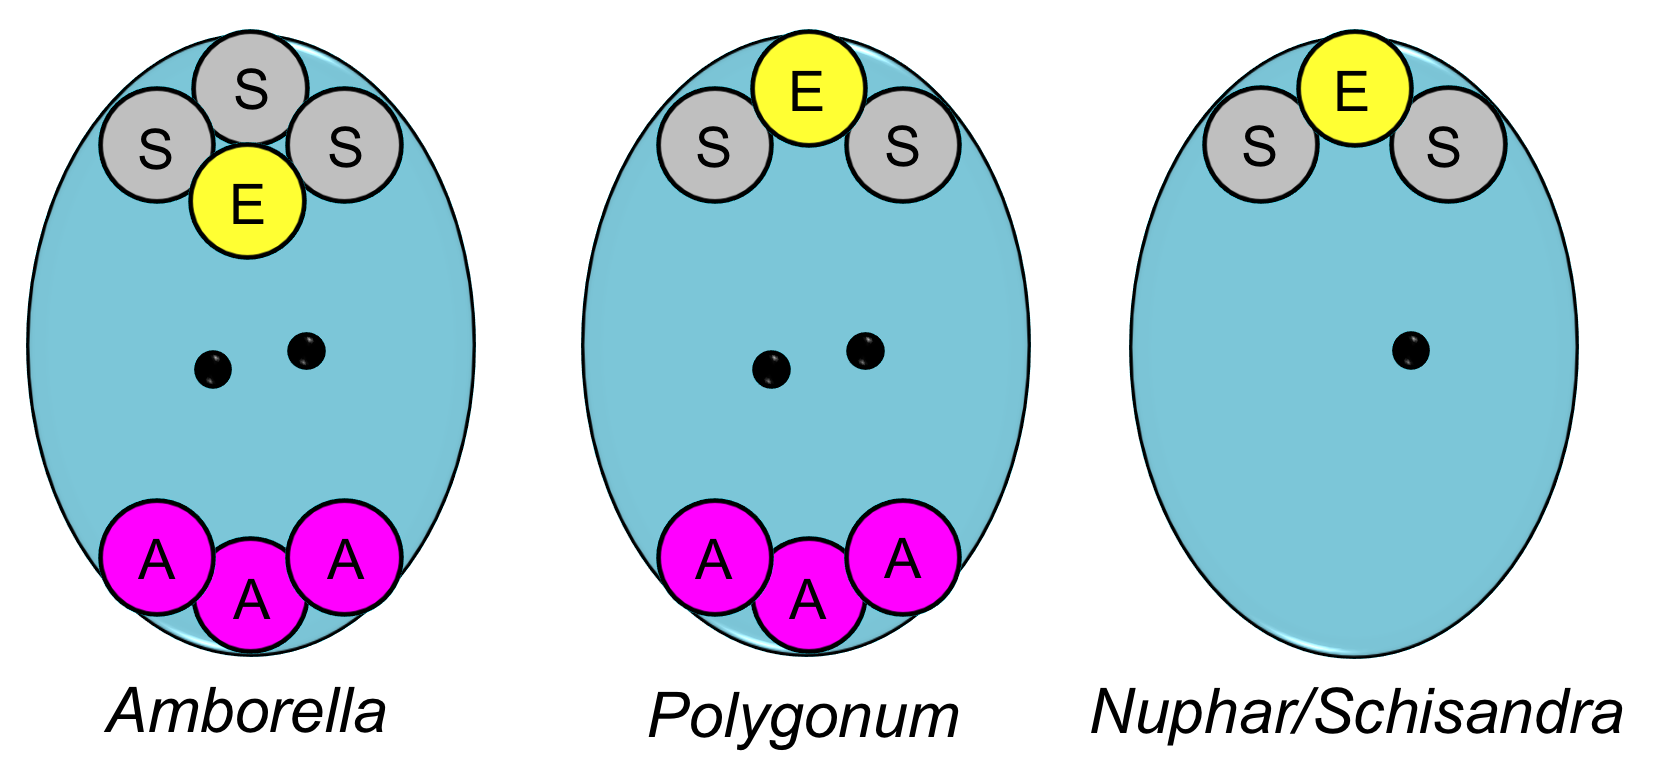 Comparison of embryo sac organization, left to right: Amborella-type, Polygonum-type, and Nuphar/Schisandra-type